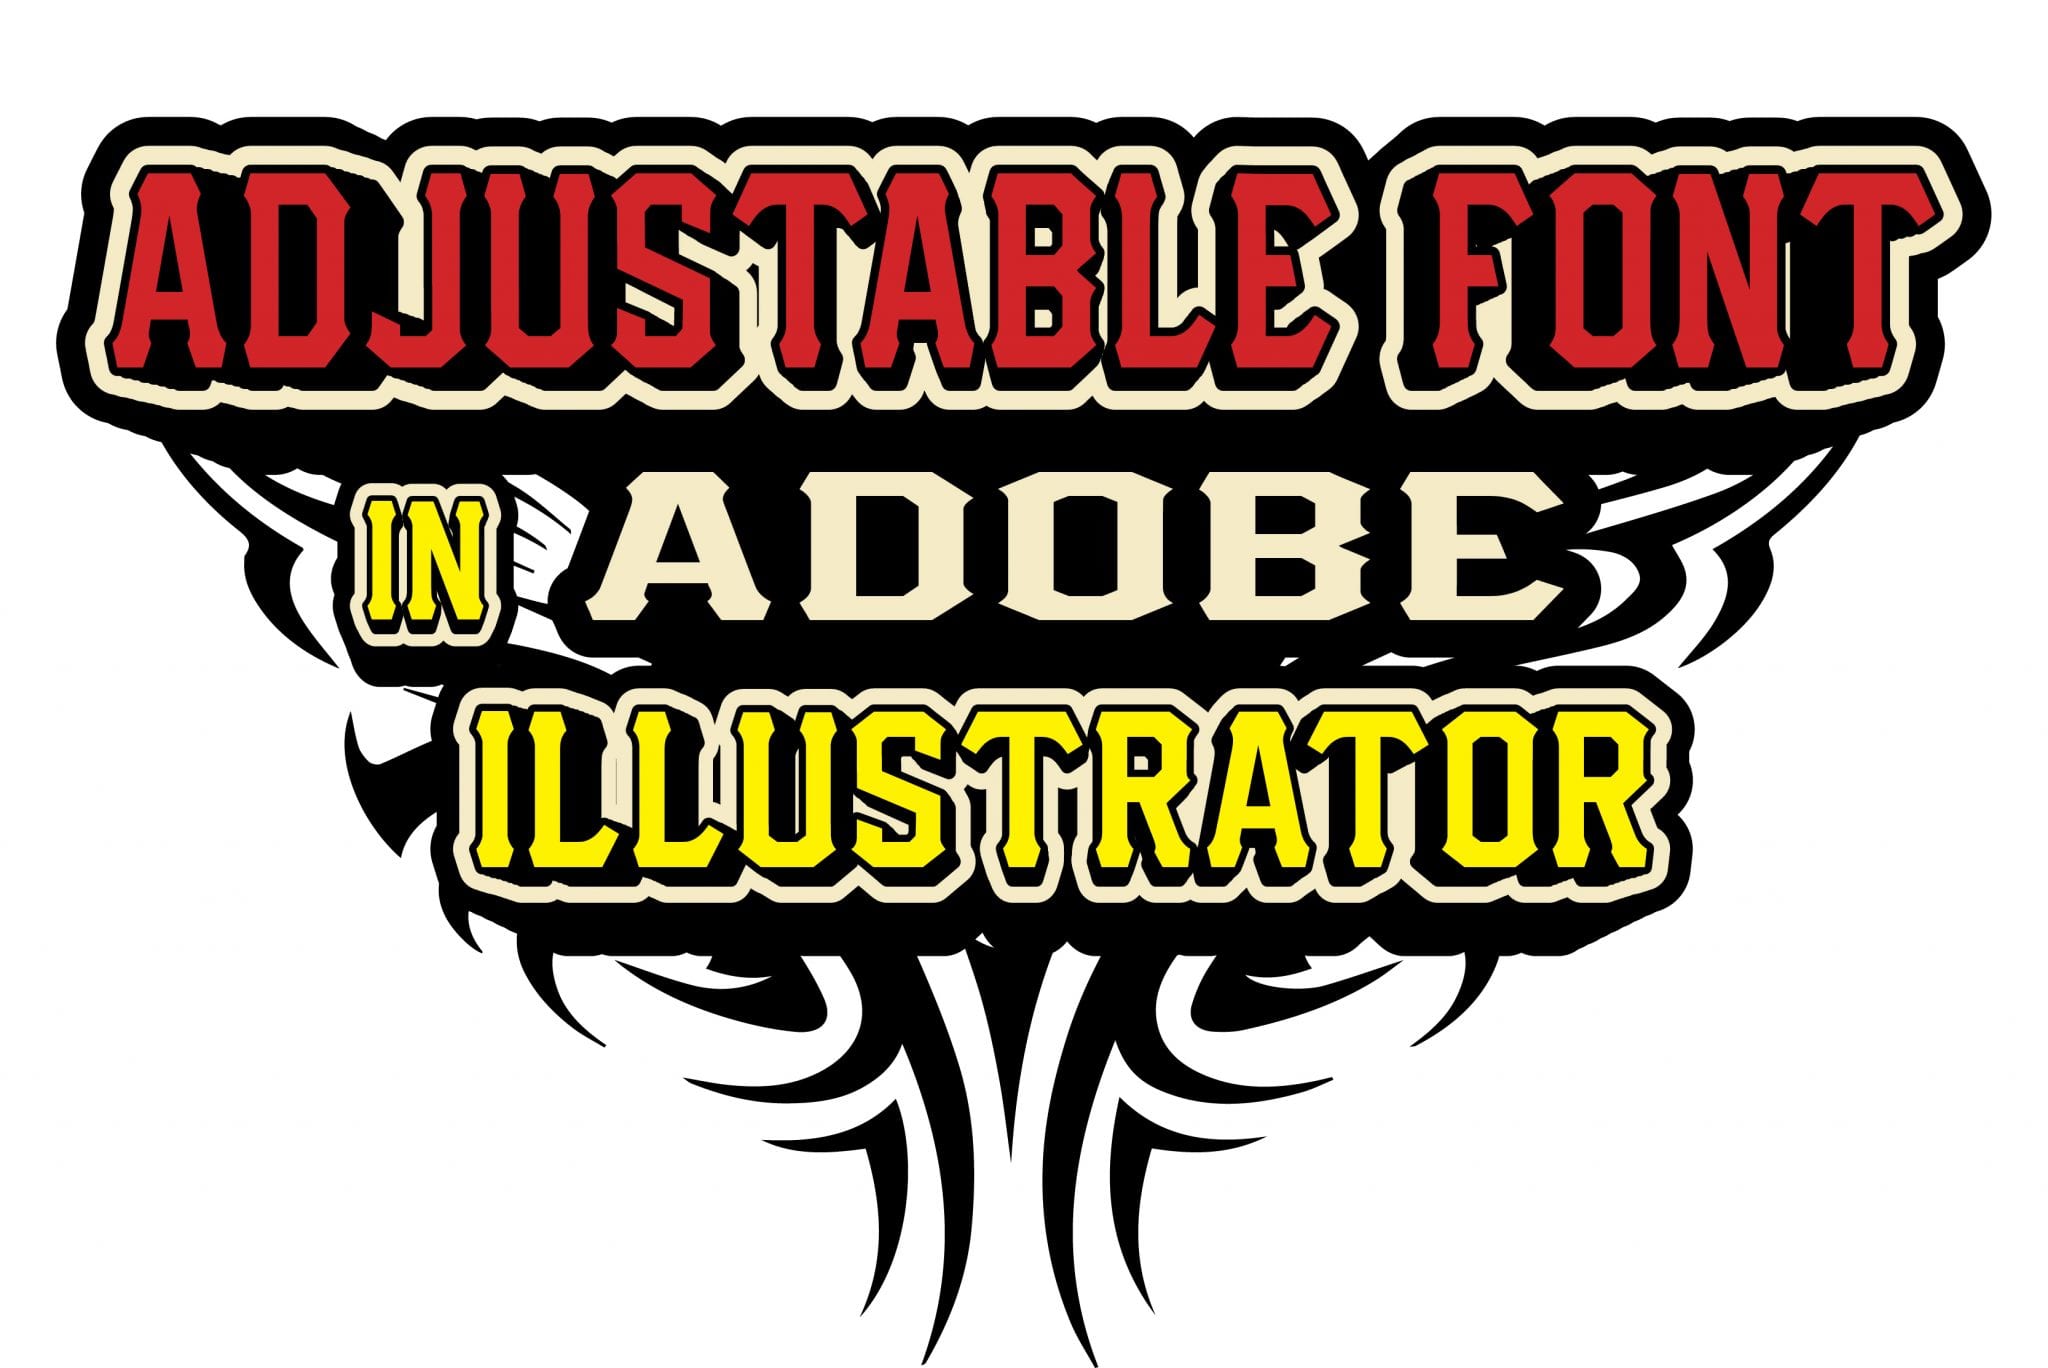 download new fonts for adobe illustrator